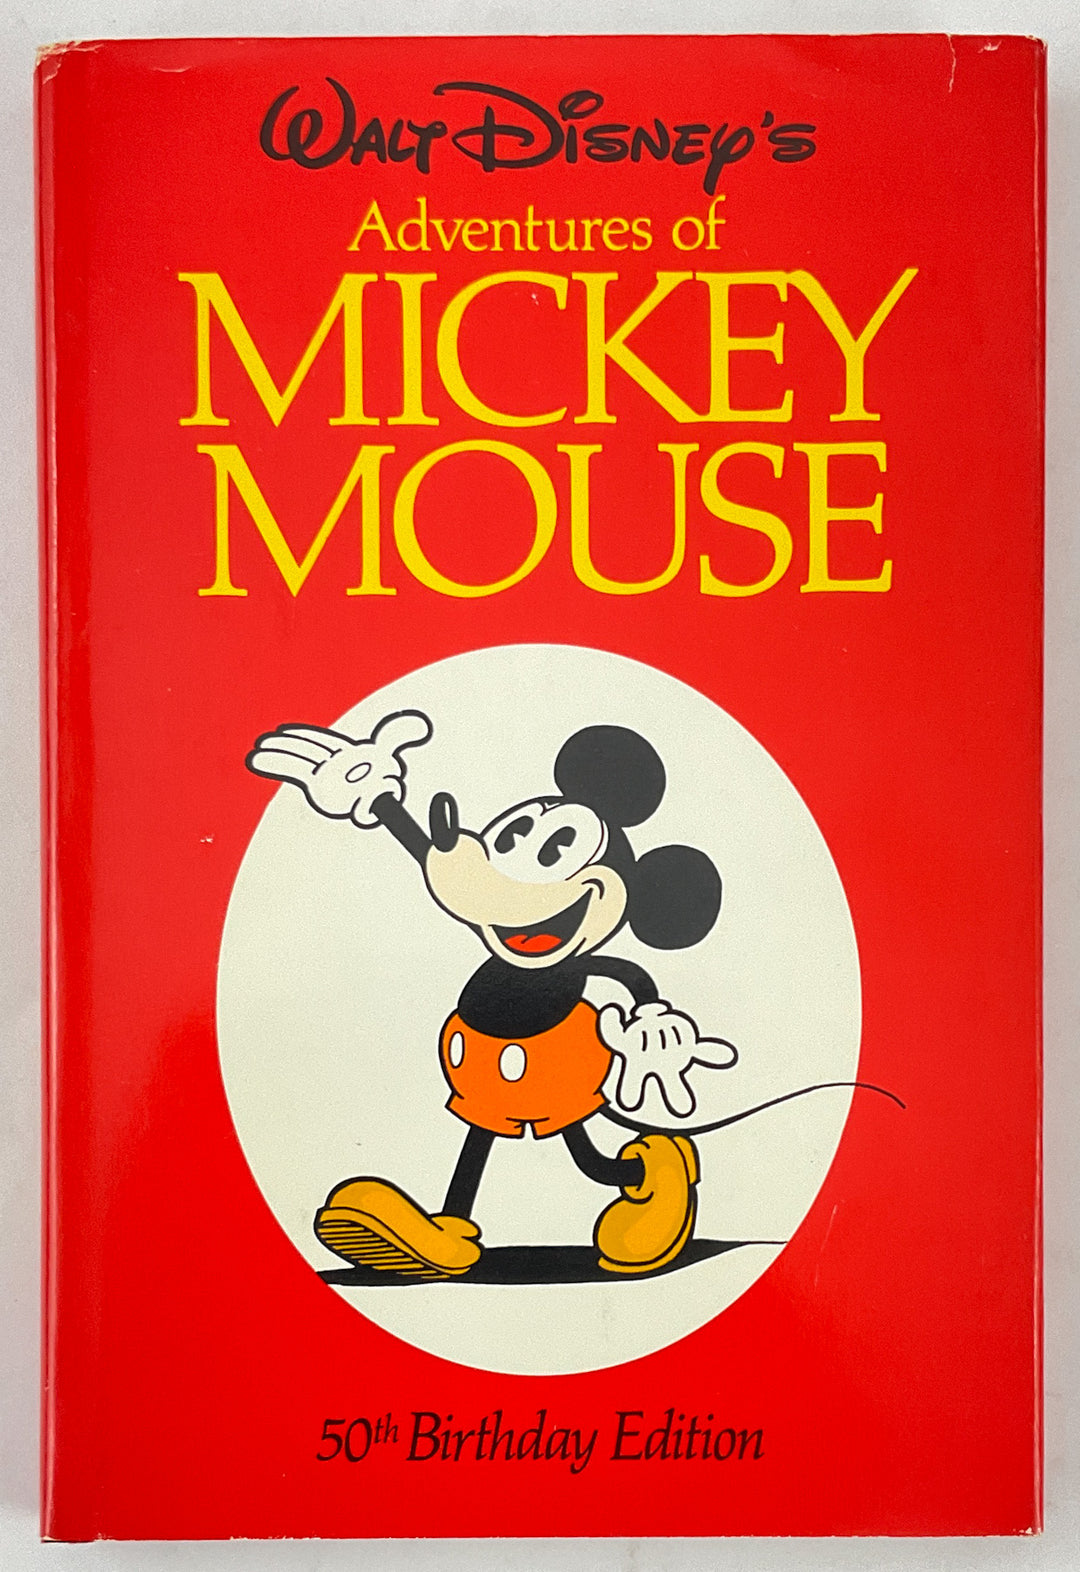 Walt Disney's Adventures of Mickey Mouse - 50th Birthday Edition